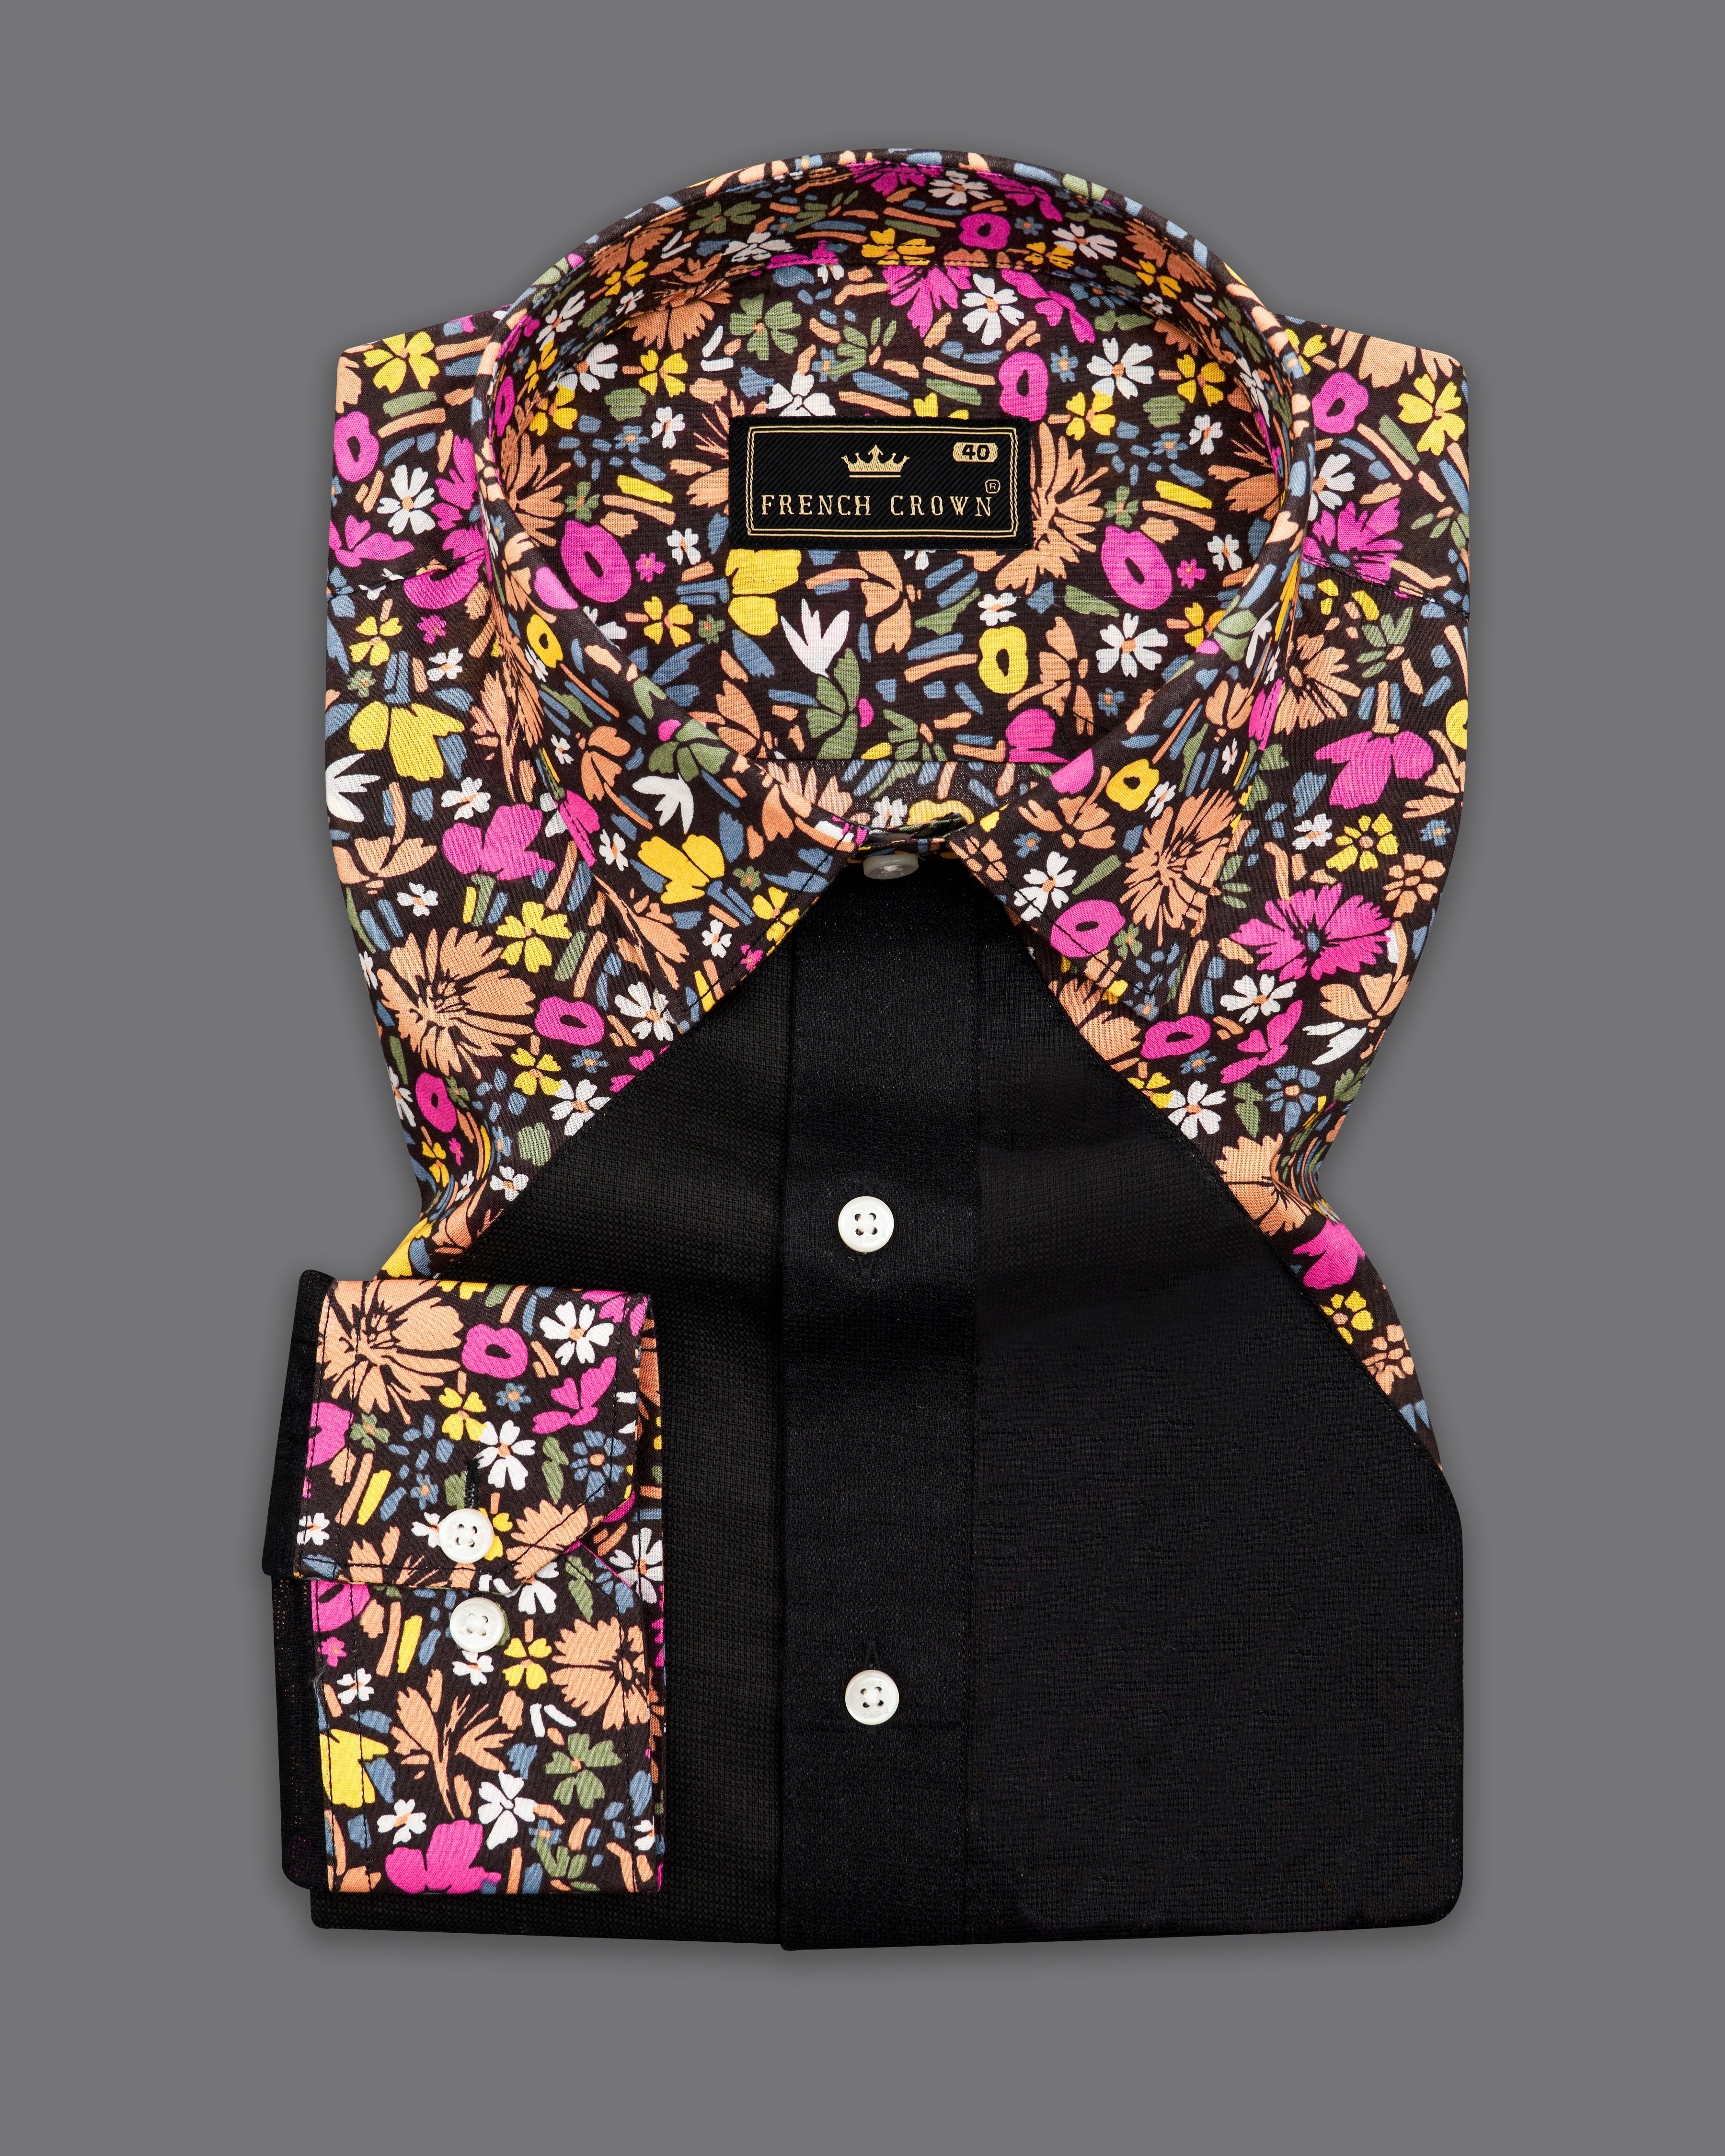 Jade Black Patch Work with Multicolour Floral Printed Premium Cotton Designer Shirt 9829-P448-38, 9829-P448-H-38, 9829-P448-39, 9829-P448-H-39, 9829-P448-40, 9829-P448-H-40, 9829-P448-42, 9829-P448-H-42, 9829-P448-44, 9829-P448-H-44, 9829-P448-46, 9829-P448-H-46, 9829-P448-48, 9829-P448-H-48, 9829-P448-50, 9829-P448-H-50, 9829-P448-52, 9829-P448-H-52